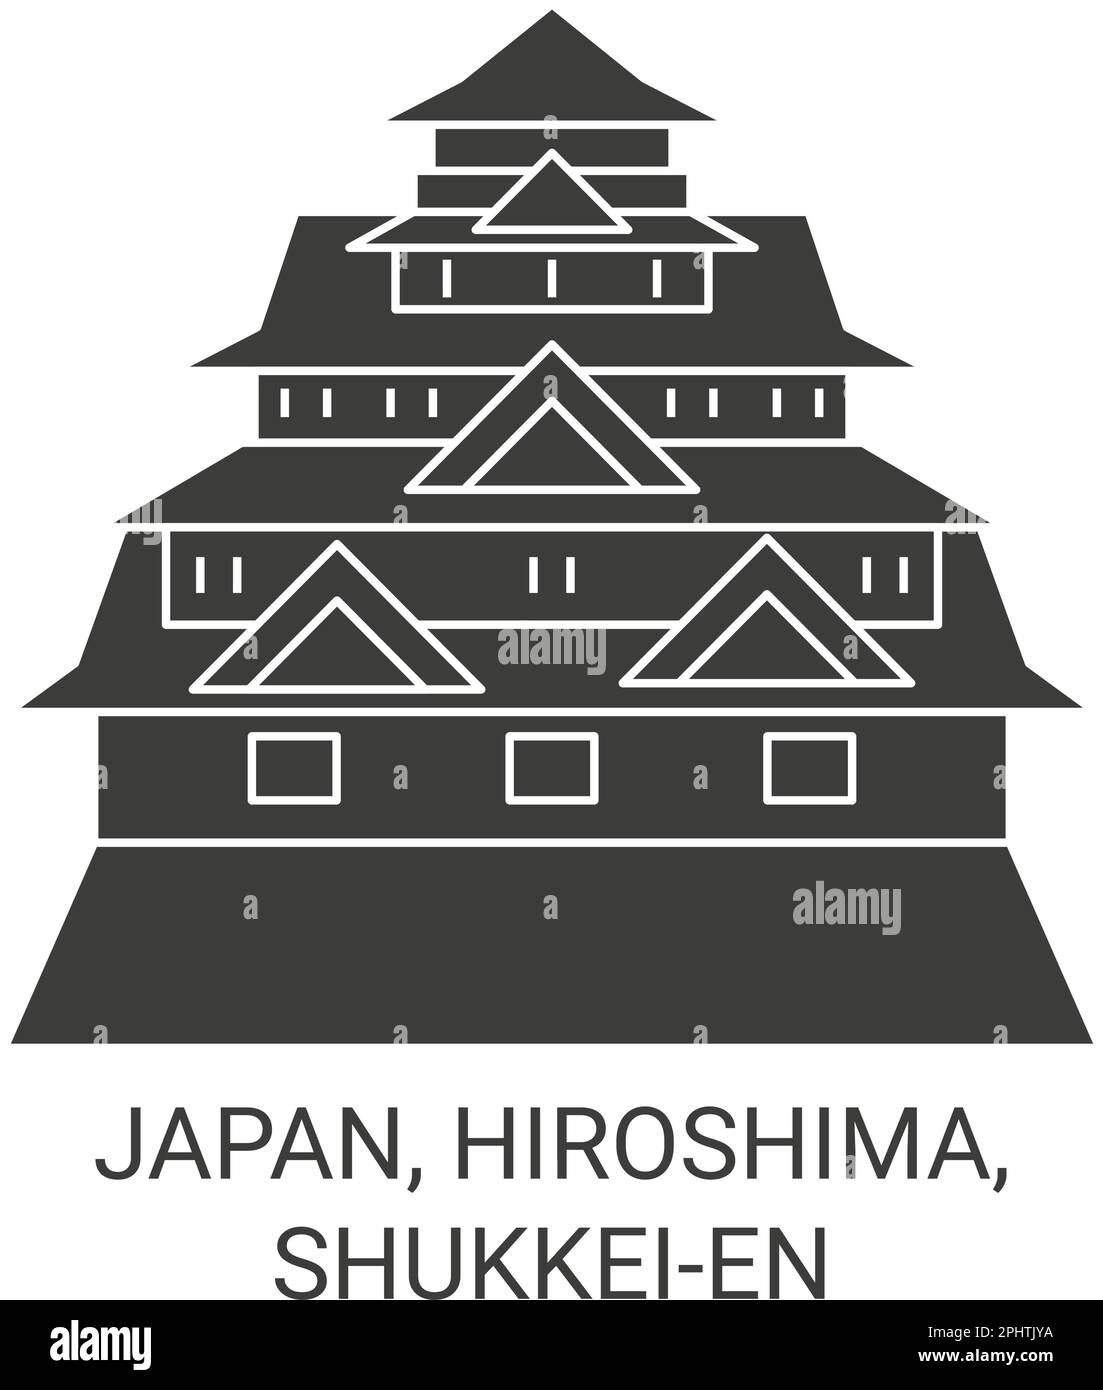 Japan, Hiroshima, Shukkeien travel landmark vector illustration Stock Vector